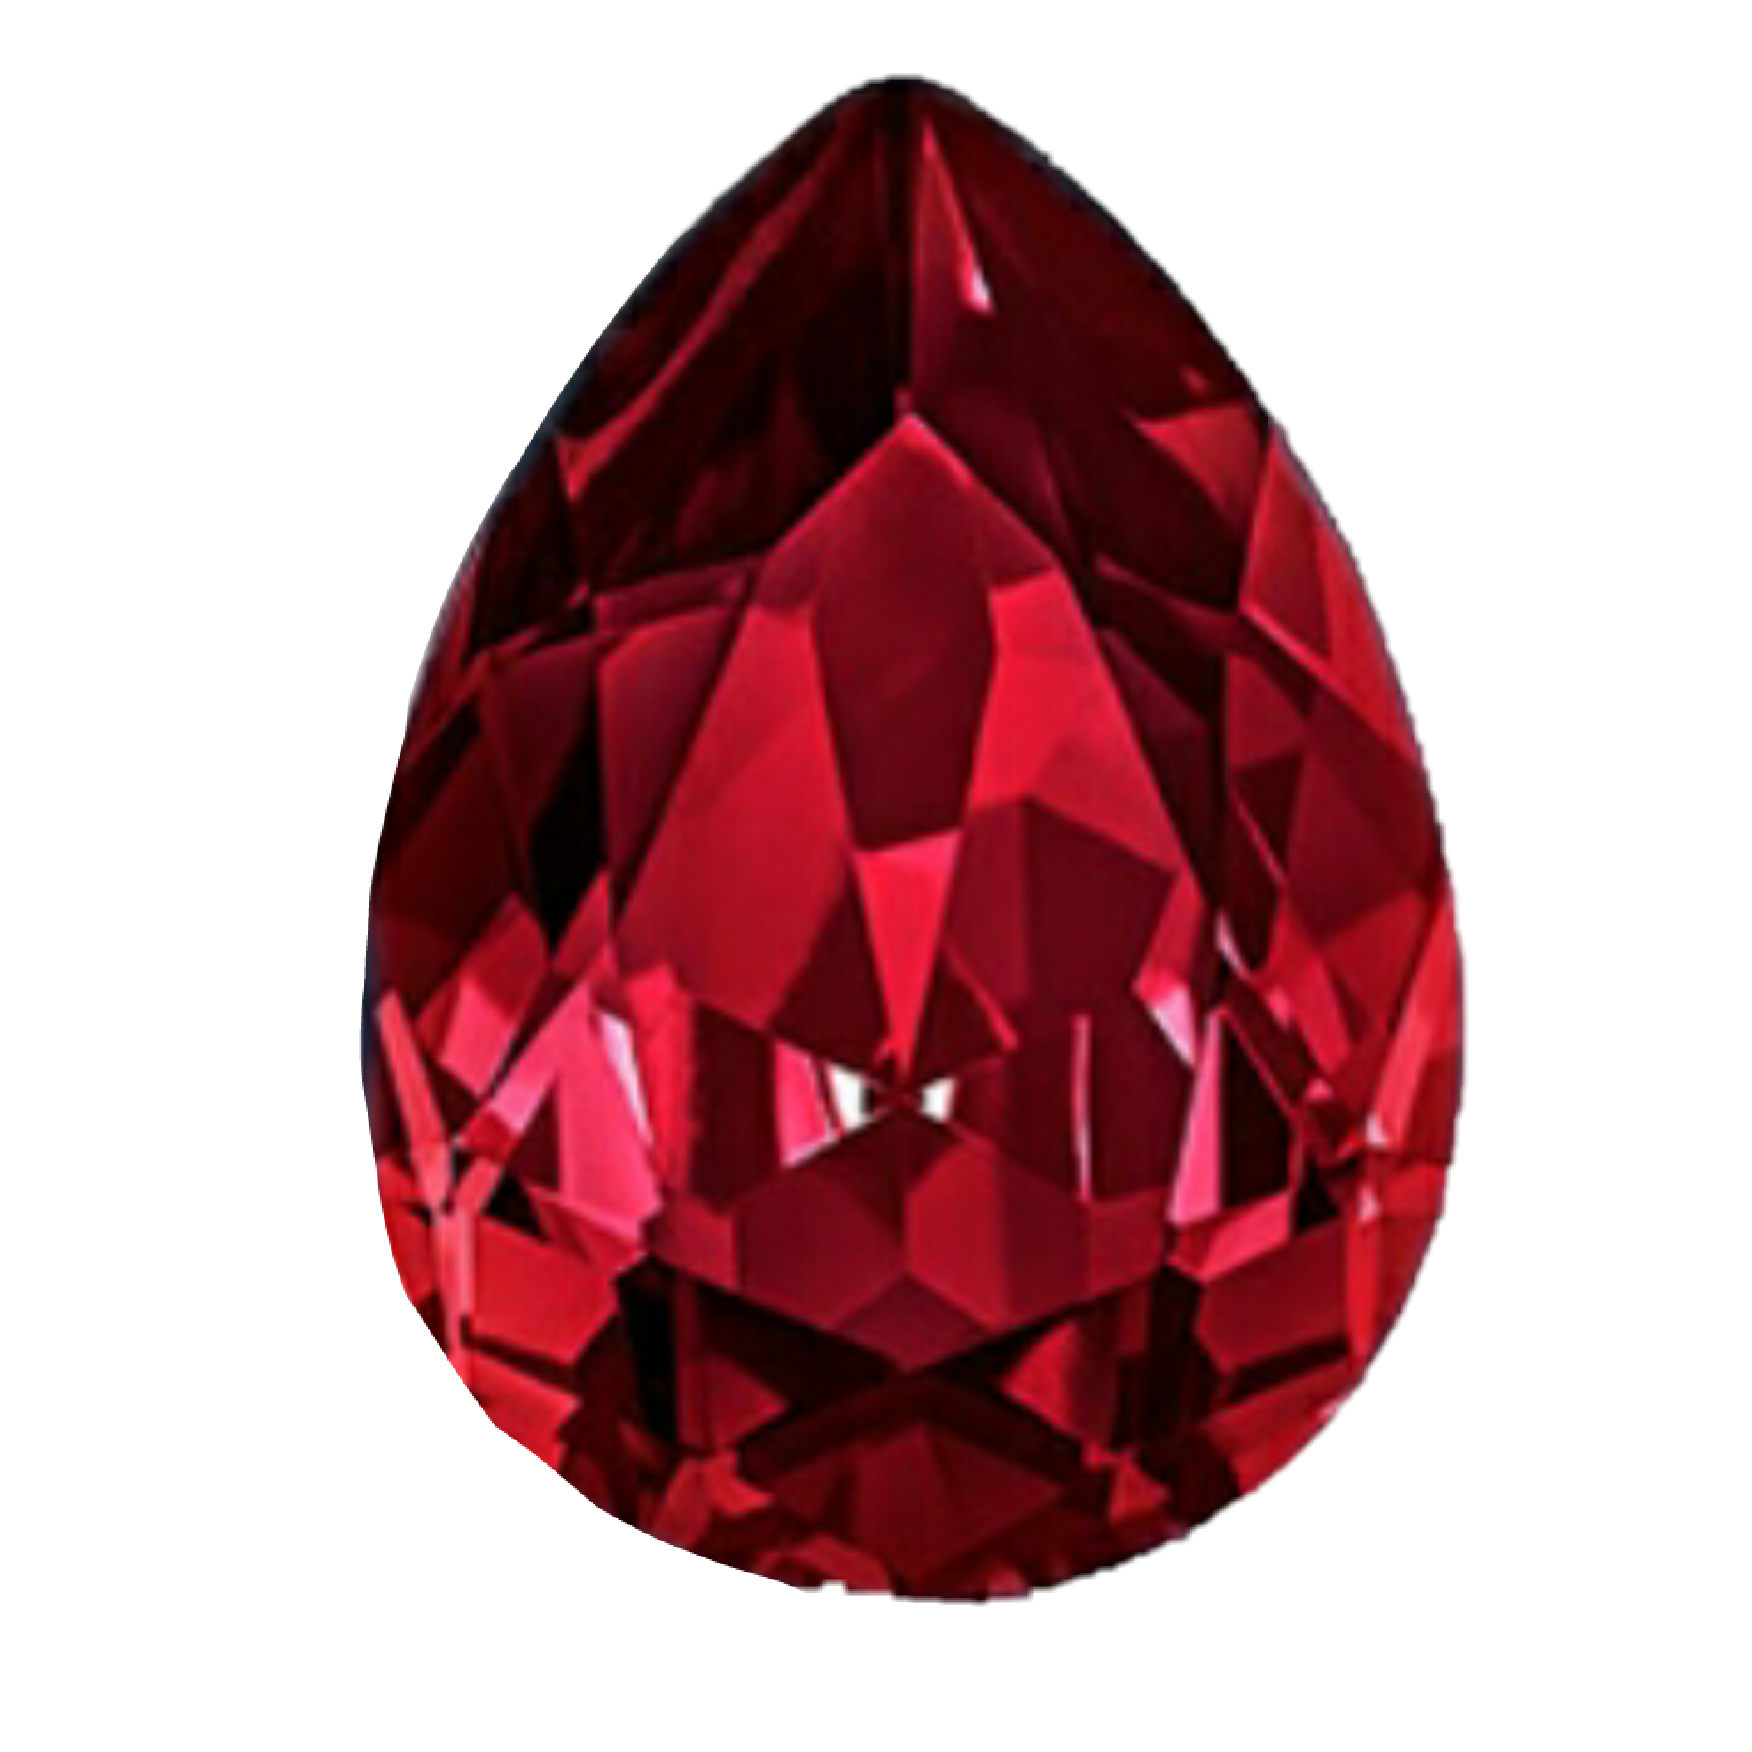 This visual is about reddiamond diamond red rouge diamant freetoedit #reddi...